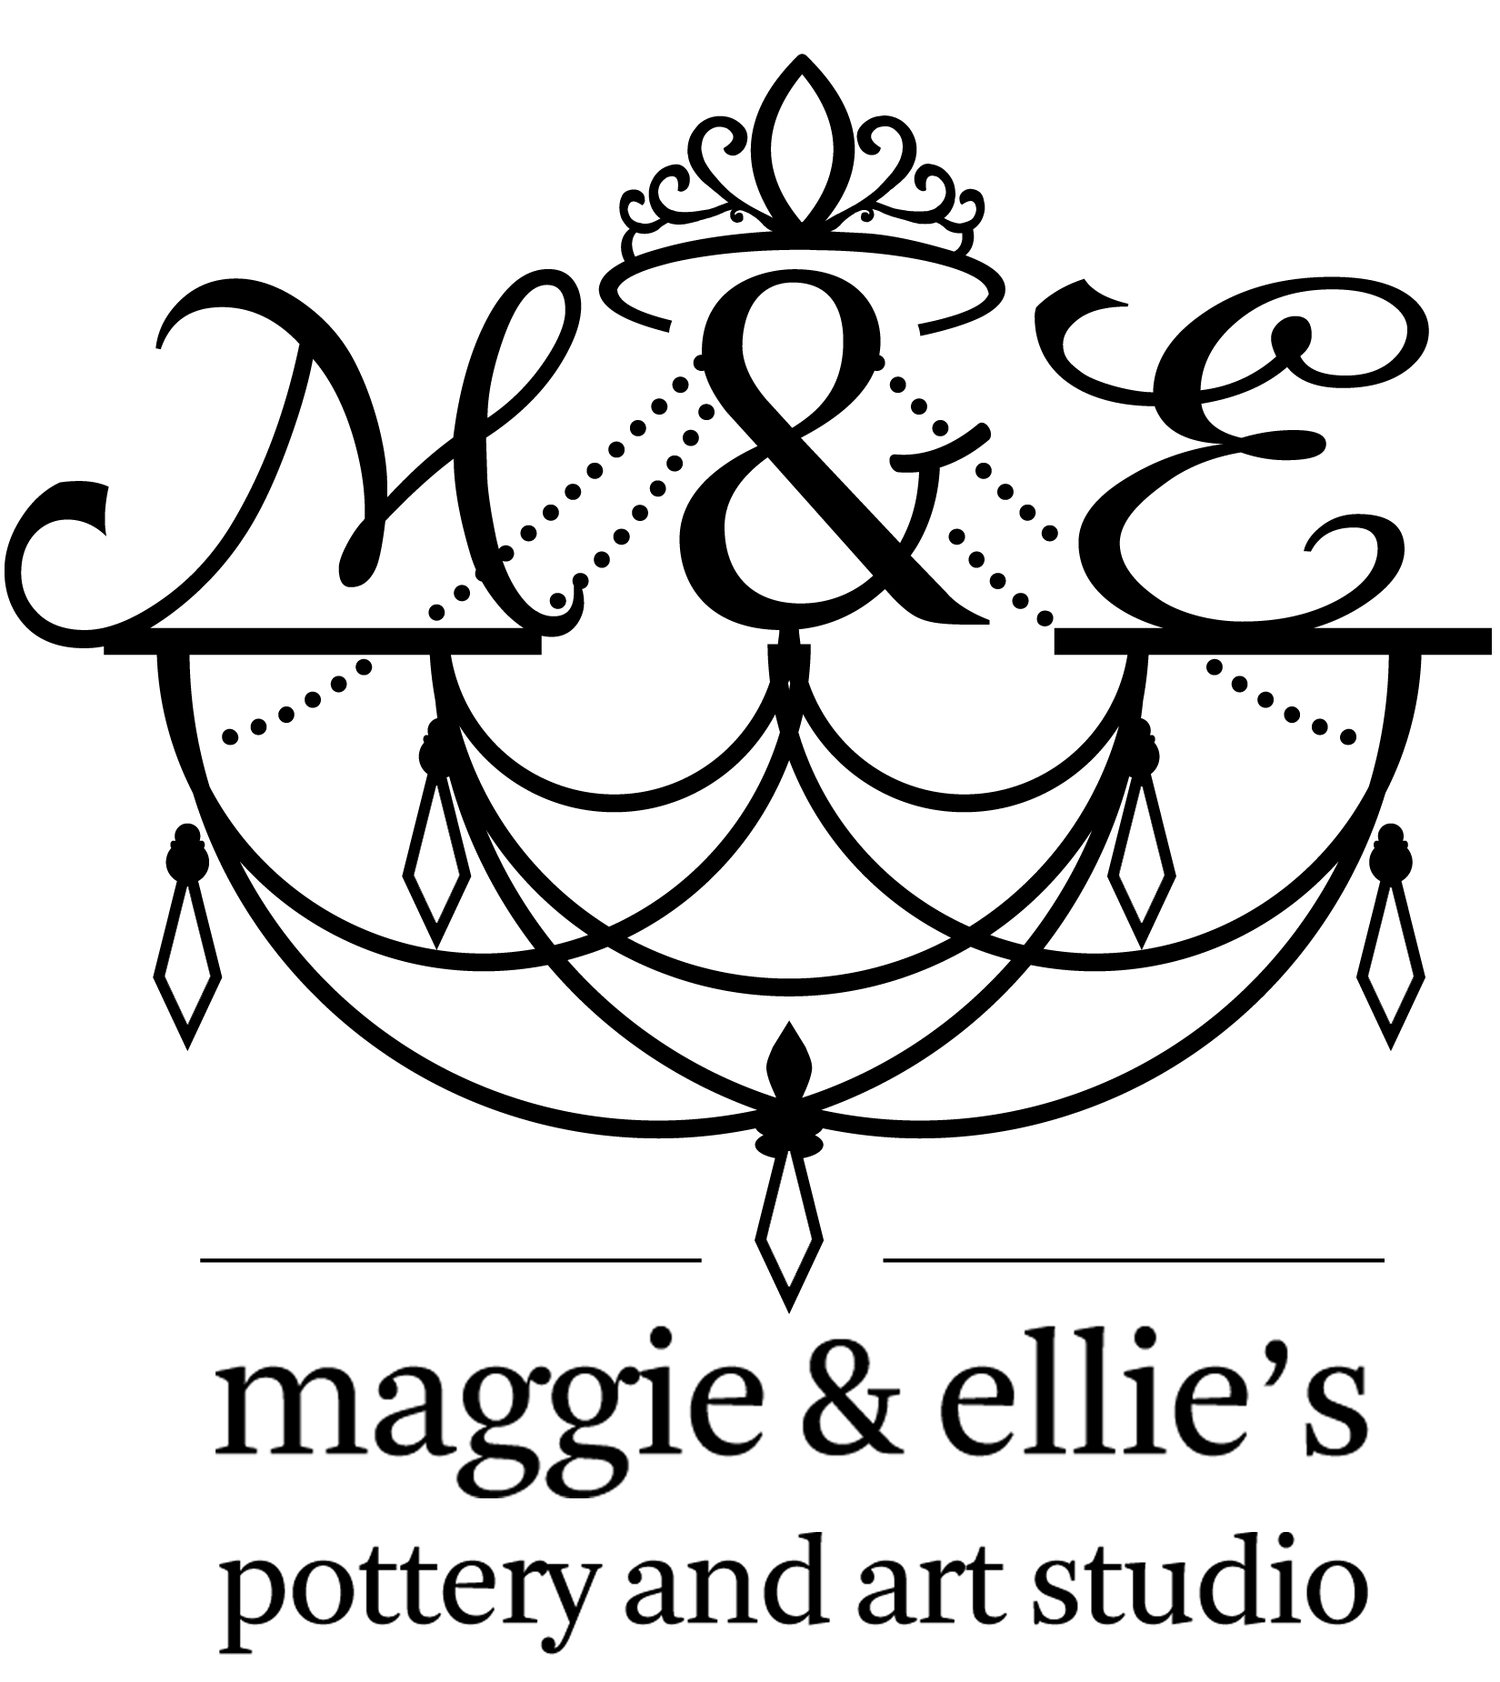 Maggie & Ellie's Pottery and Art Studio